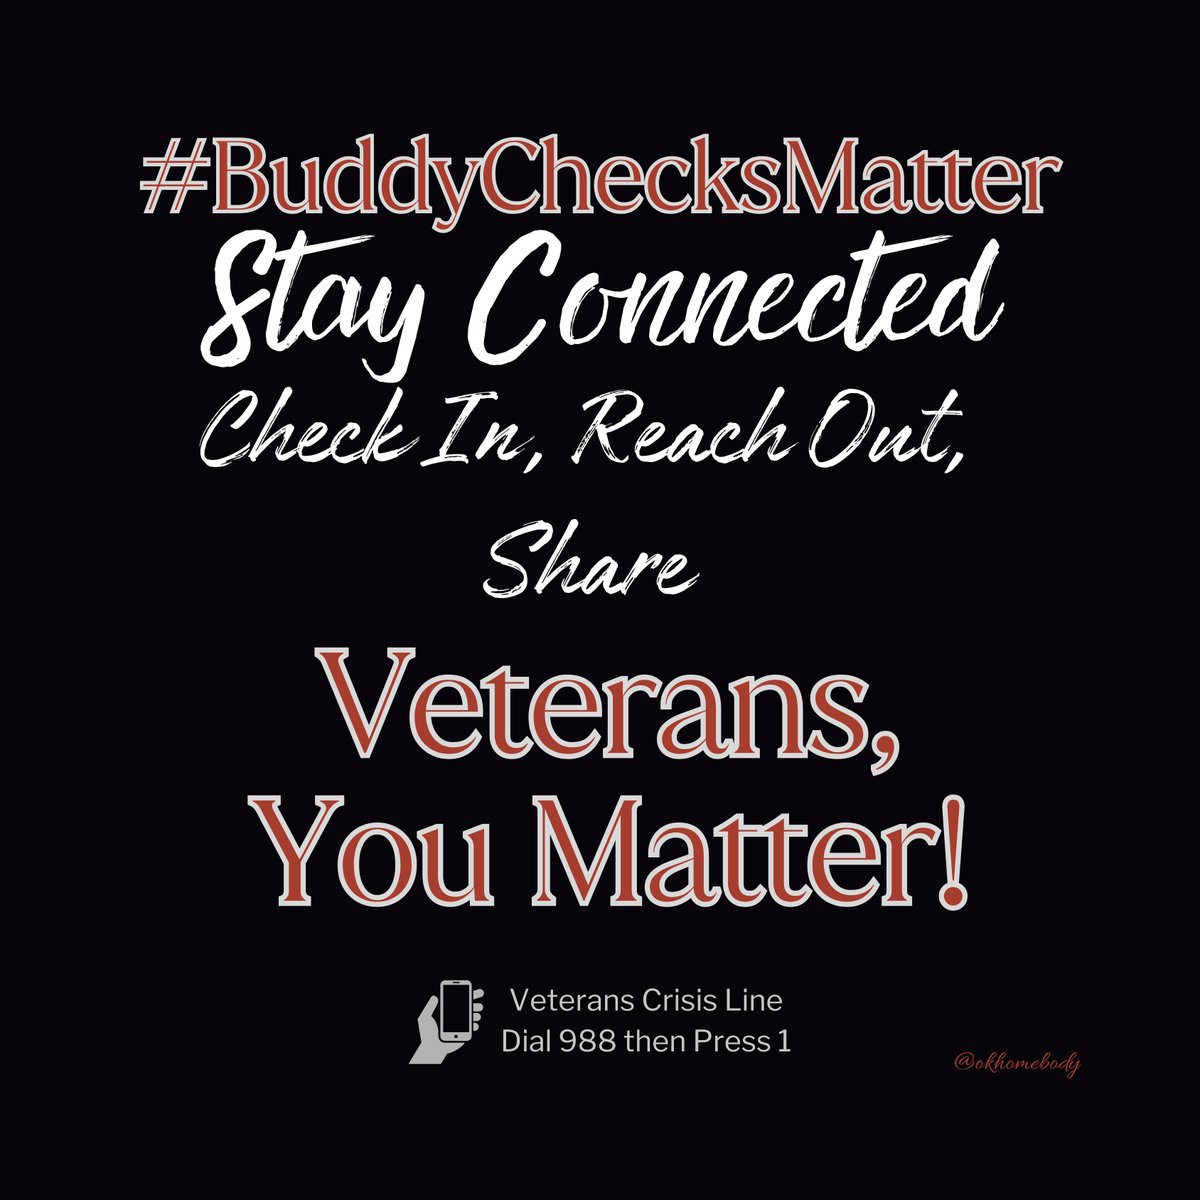 🇺🇸 #ThankfulThursday #Buddy✅with #Veterans 🙏RH
❤️#VeteransLivesMatter #Turn22to0❤️
⭐️ 🇺🇸 Repost #EndVeteranSuicide #dial988press1 🇺🇸⭐️
🇺🇸@Bpup501🙏@Viatorc @jawjaboy71 🙏 @Echo_5_Delta👈
🇺🇸 @bayou_barry🙏 @Sarge17157120 @usaf1240👈
🇺🇸 @Geeky_Redneck @RetiredUSN_USPS